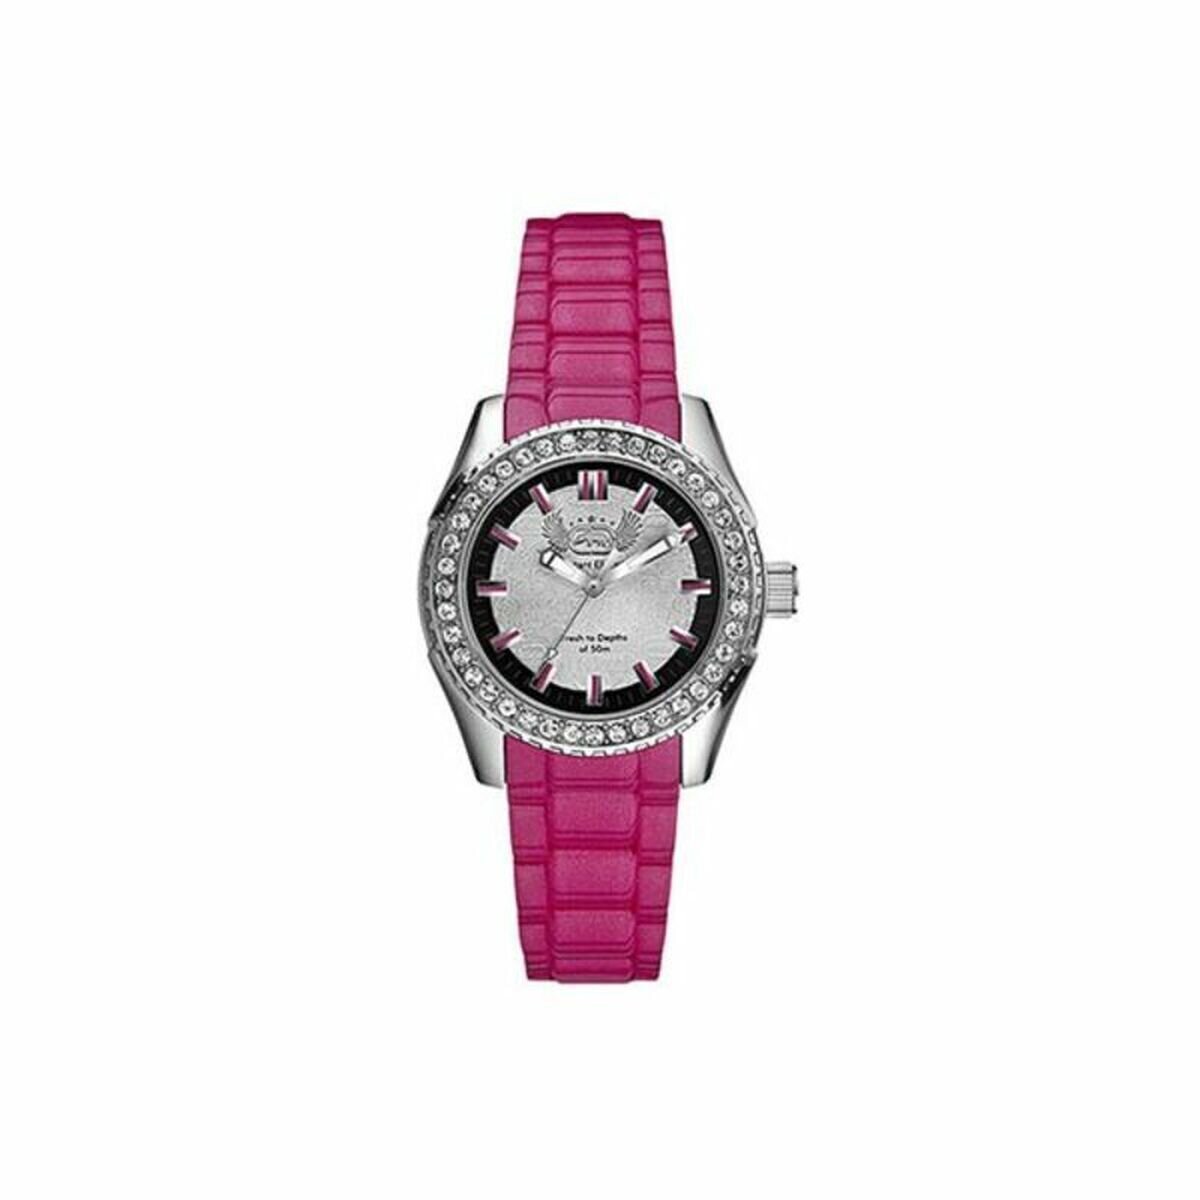 Ladies Pink and diamante Marc Ecko wrist watch